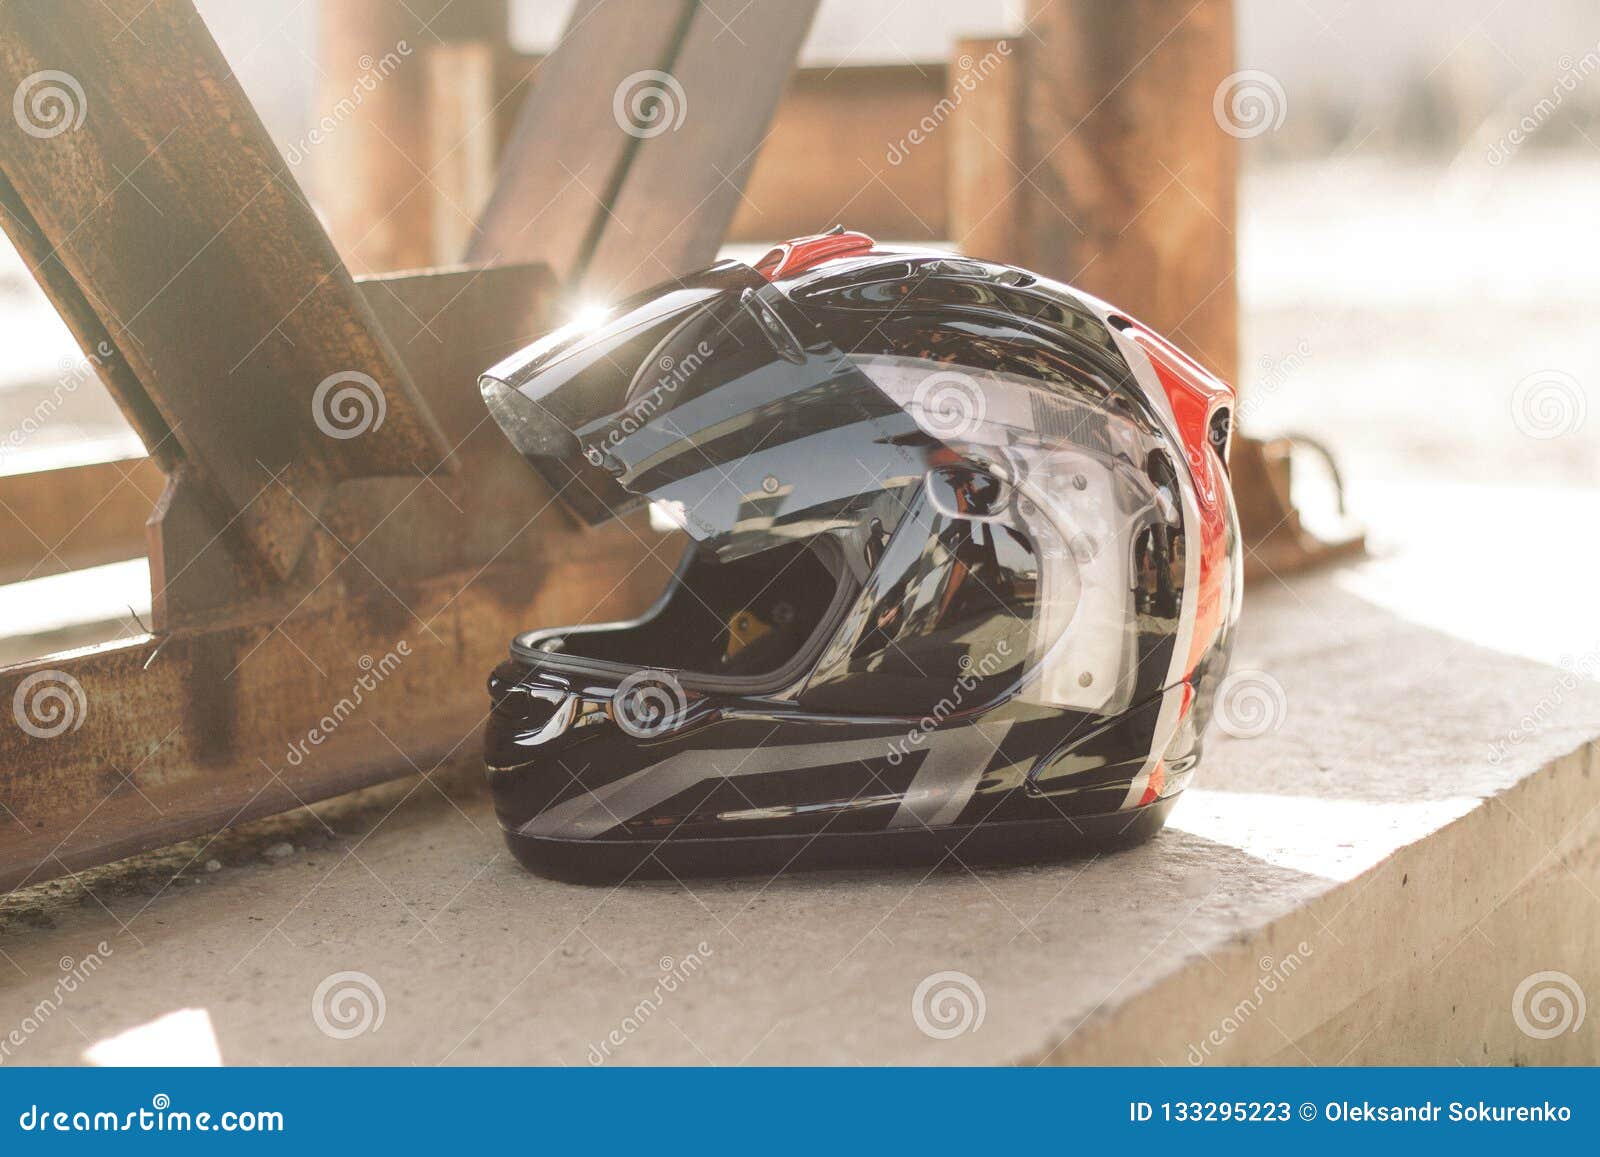 Modern motorcycle helmet stock image. Image of handsome - 133295223